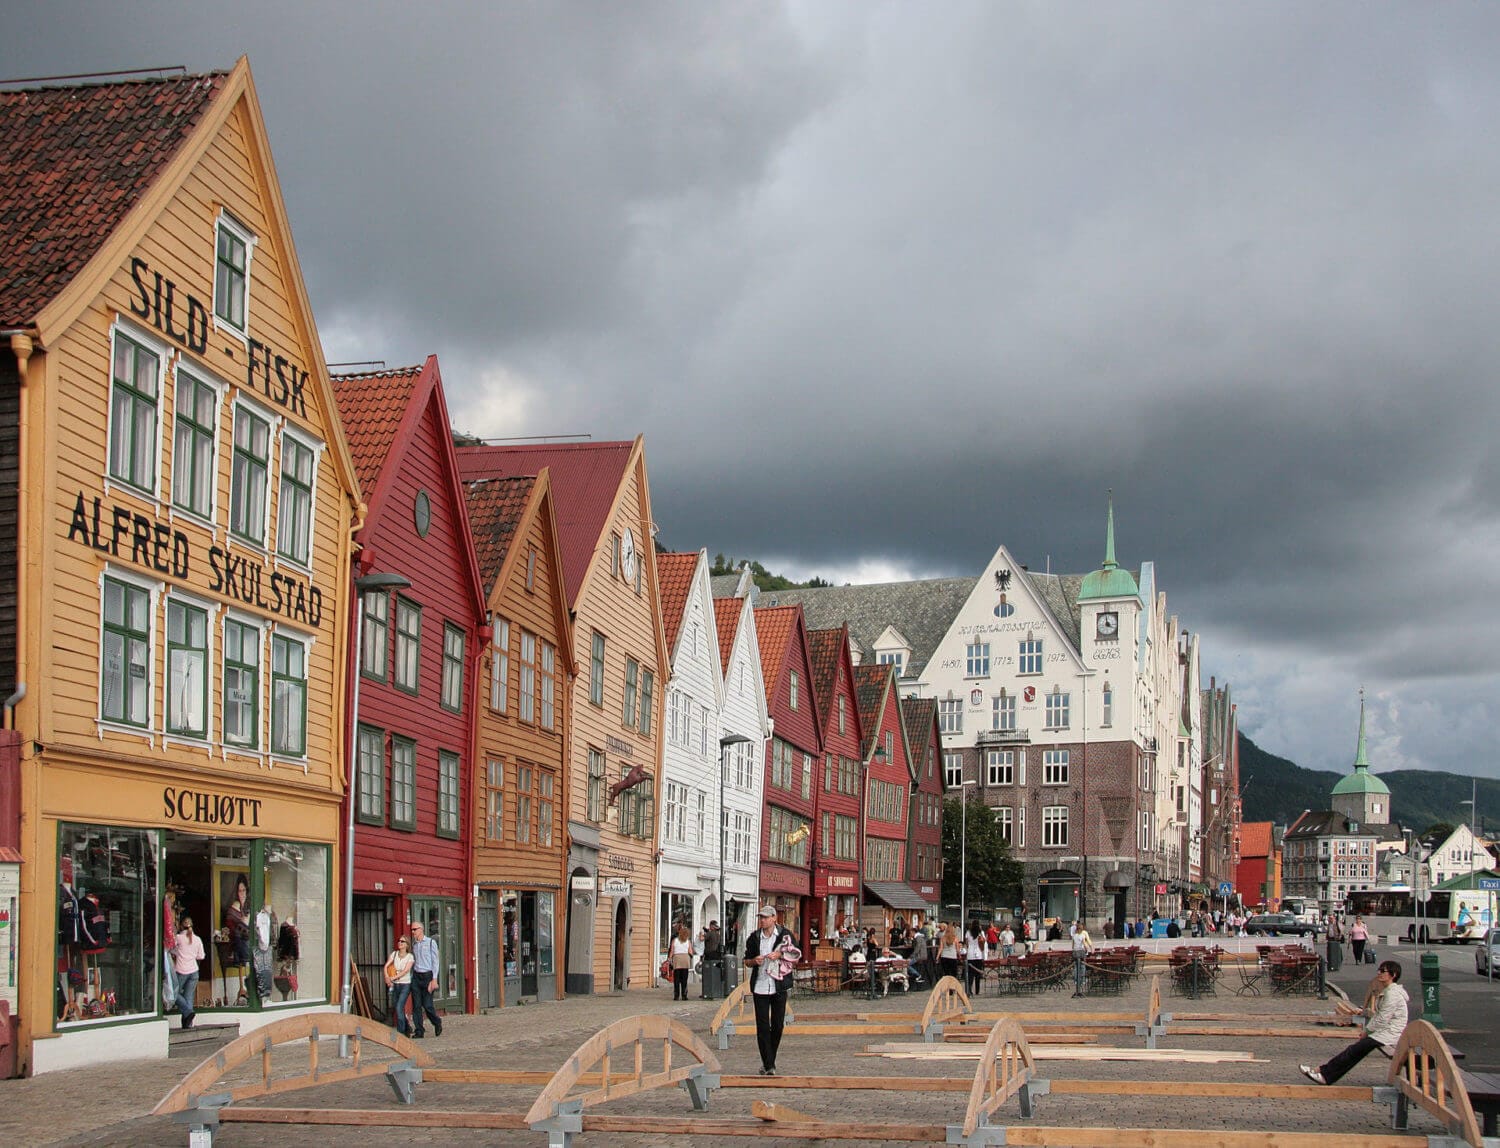 The Bryggen district in Bergen